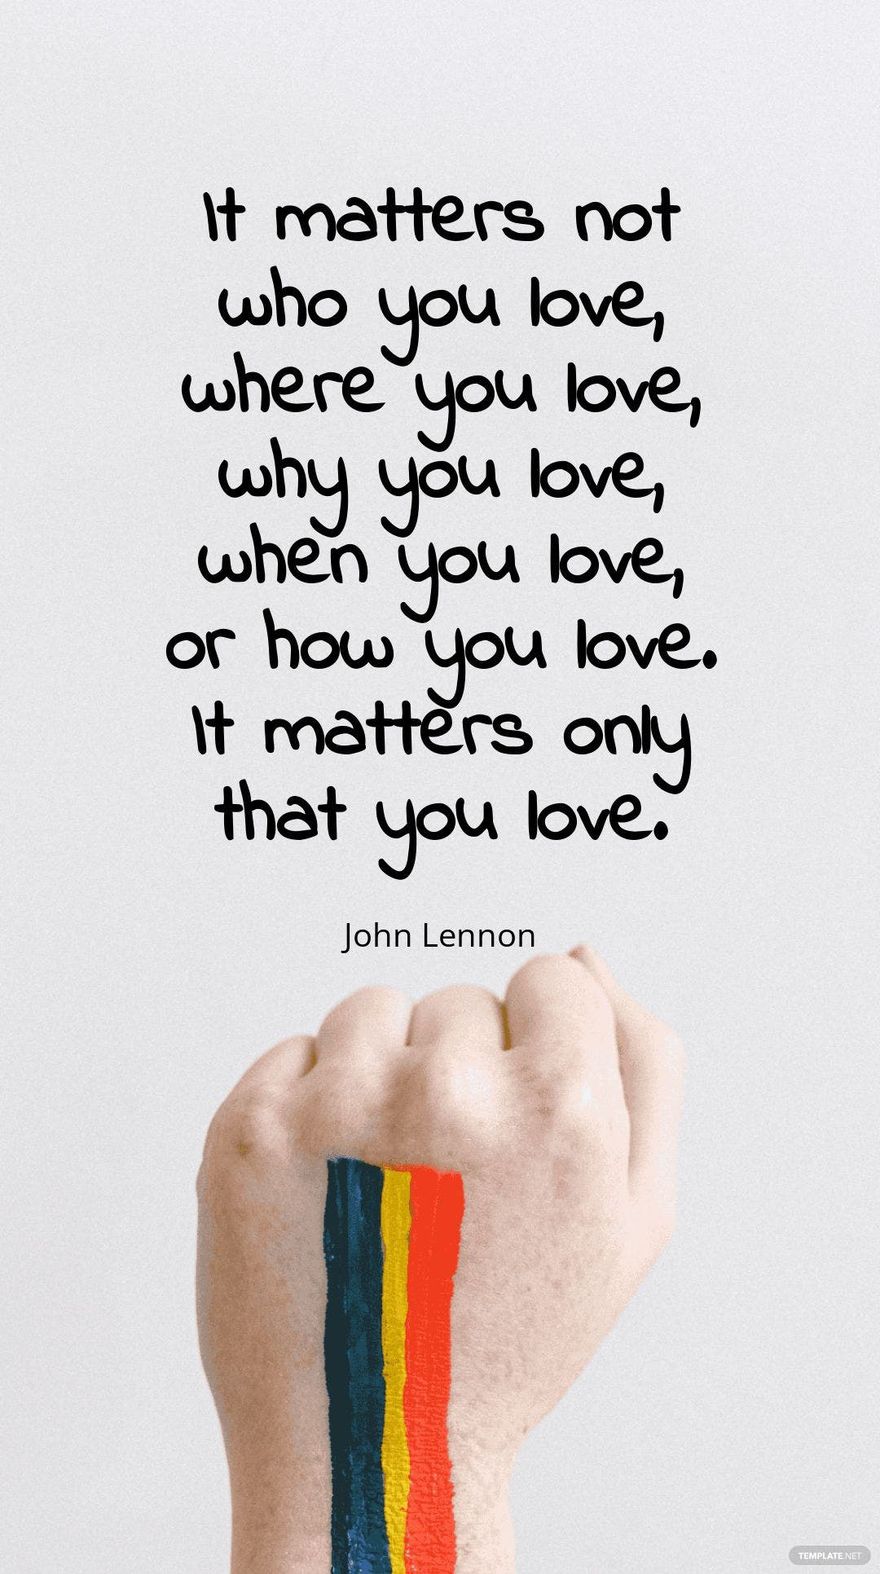 John Lennon - It matters not who you love, where you love, why you love, when you love, or how you love. It matters only that you love.